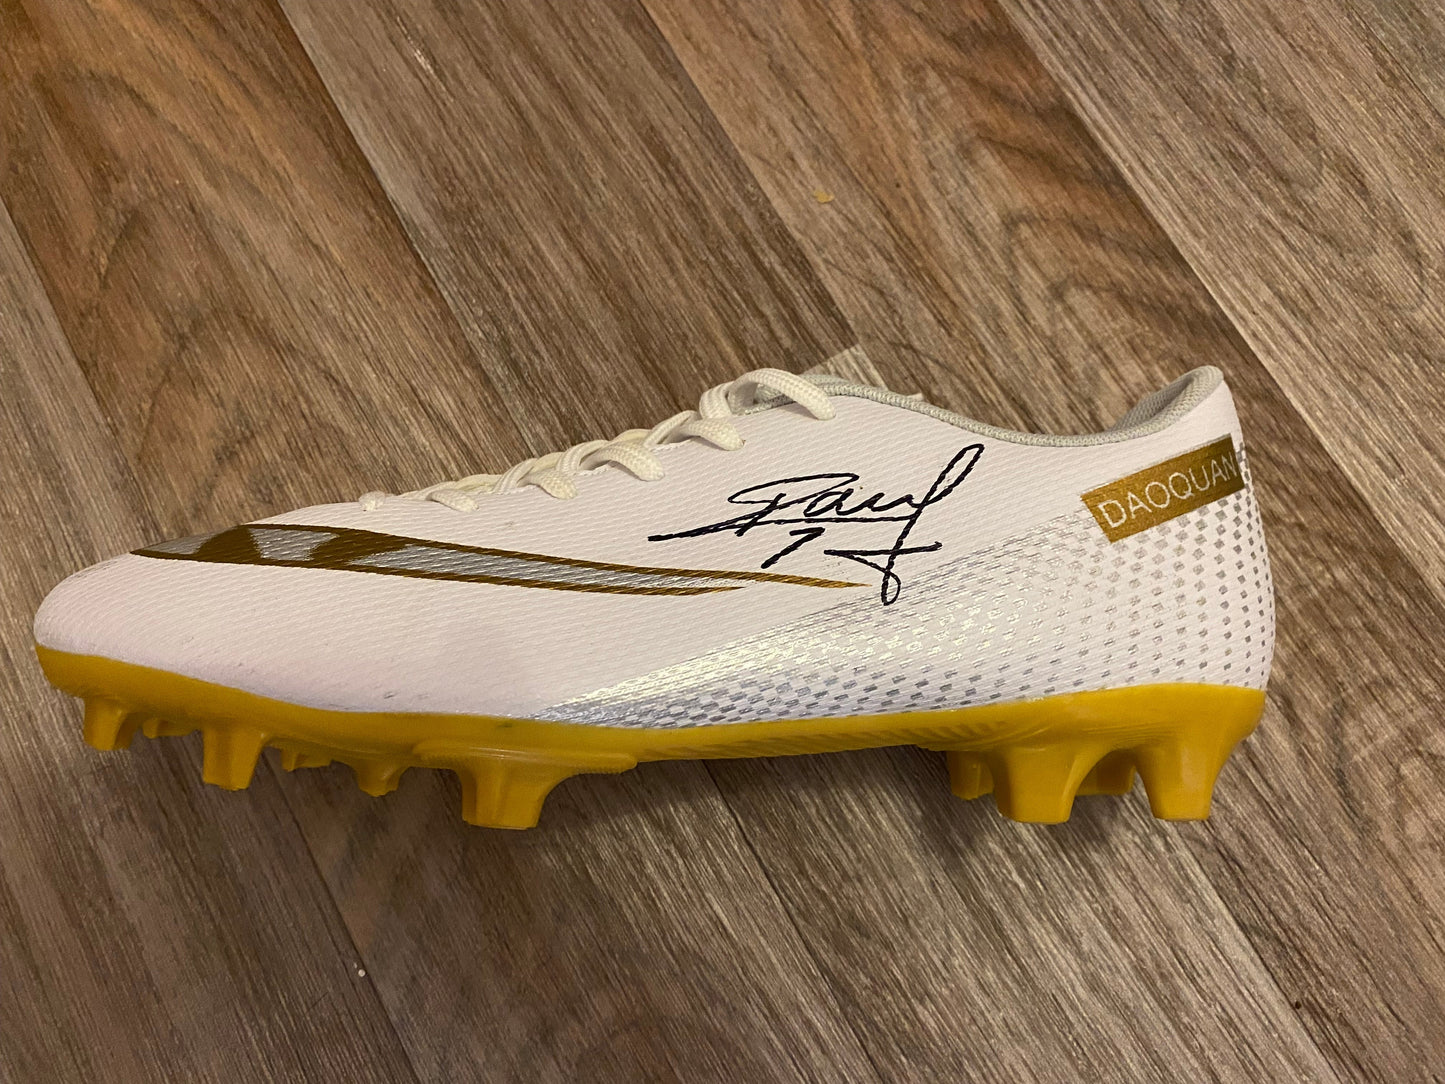 Raul Jiminez - Fulham - hand signed football boot - FFC memorabilia, gift, christmas gift, autograph